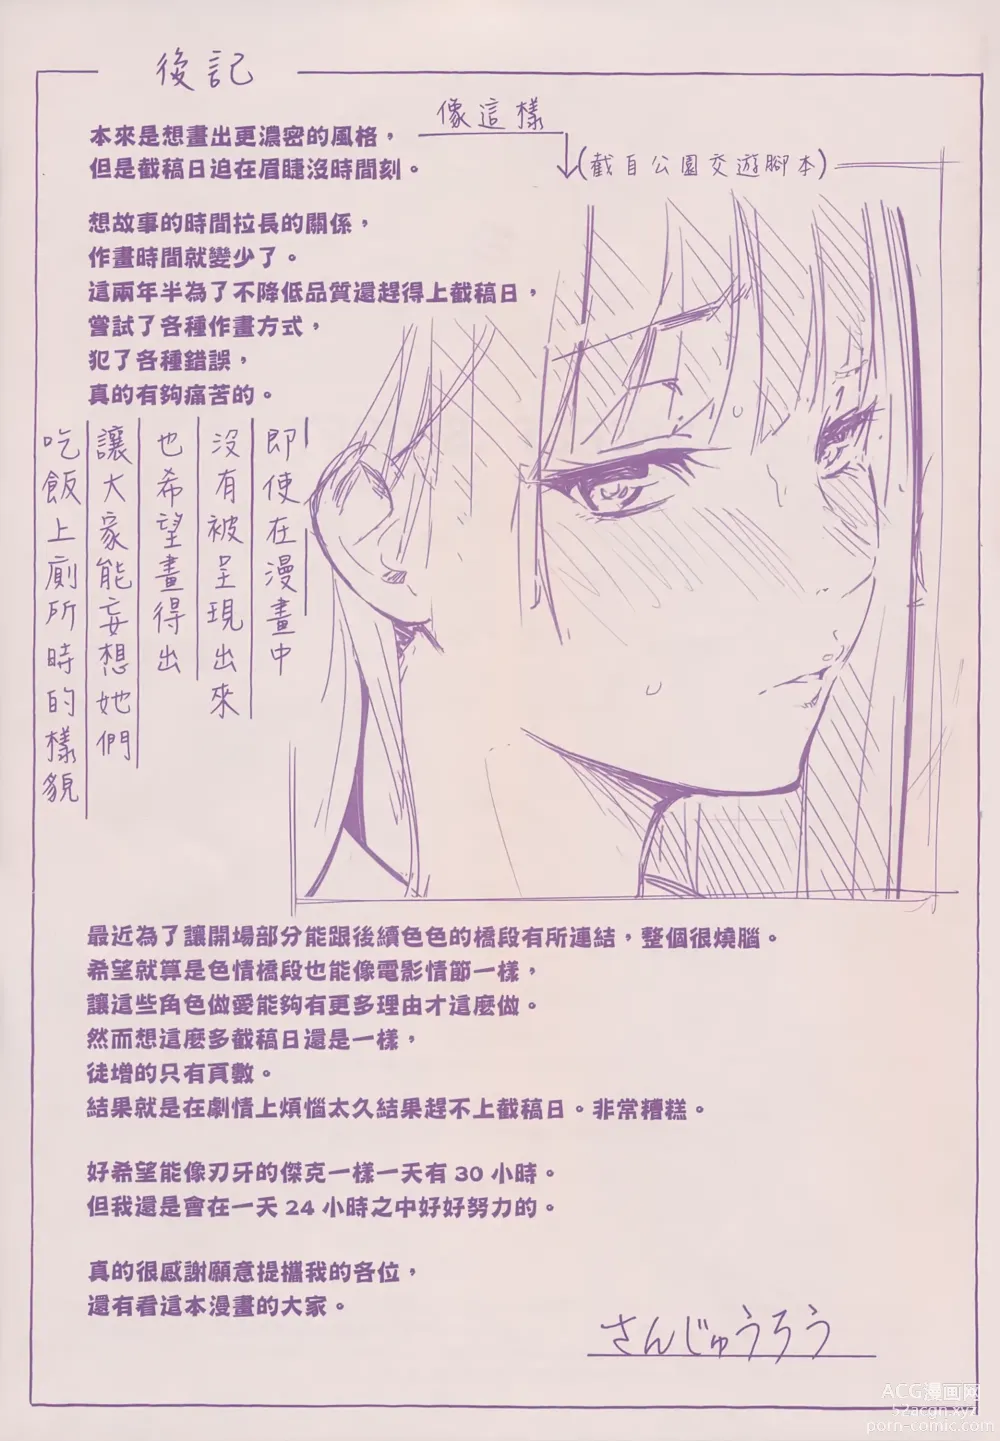 Page 183 of manga 祕密x祕密 (uncensored)